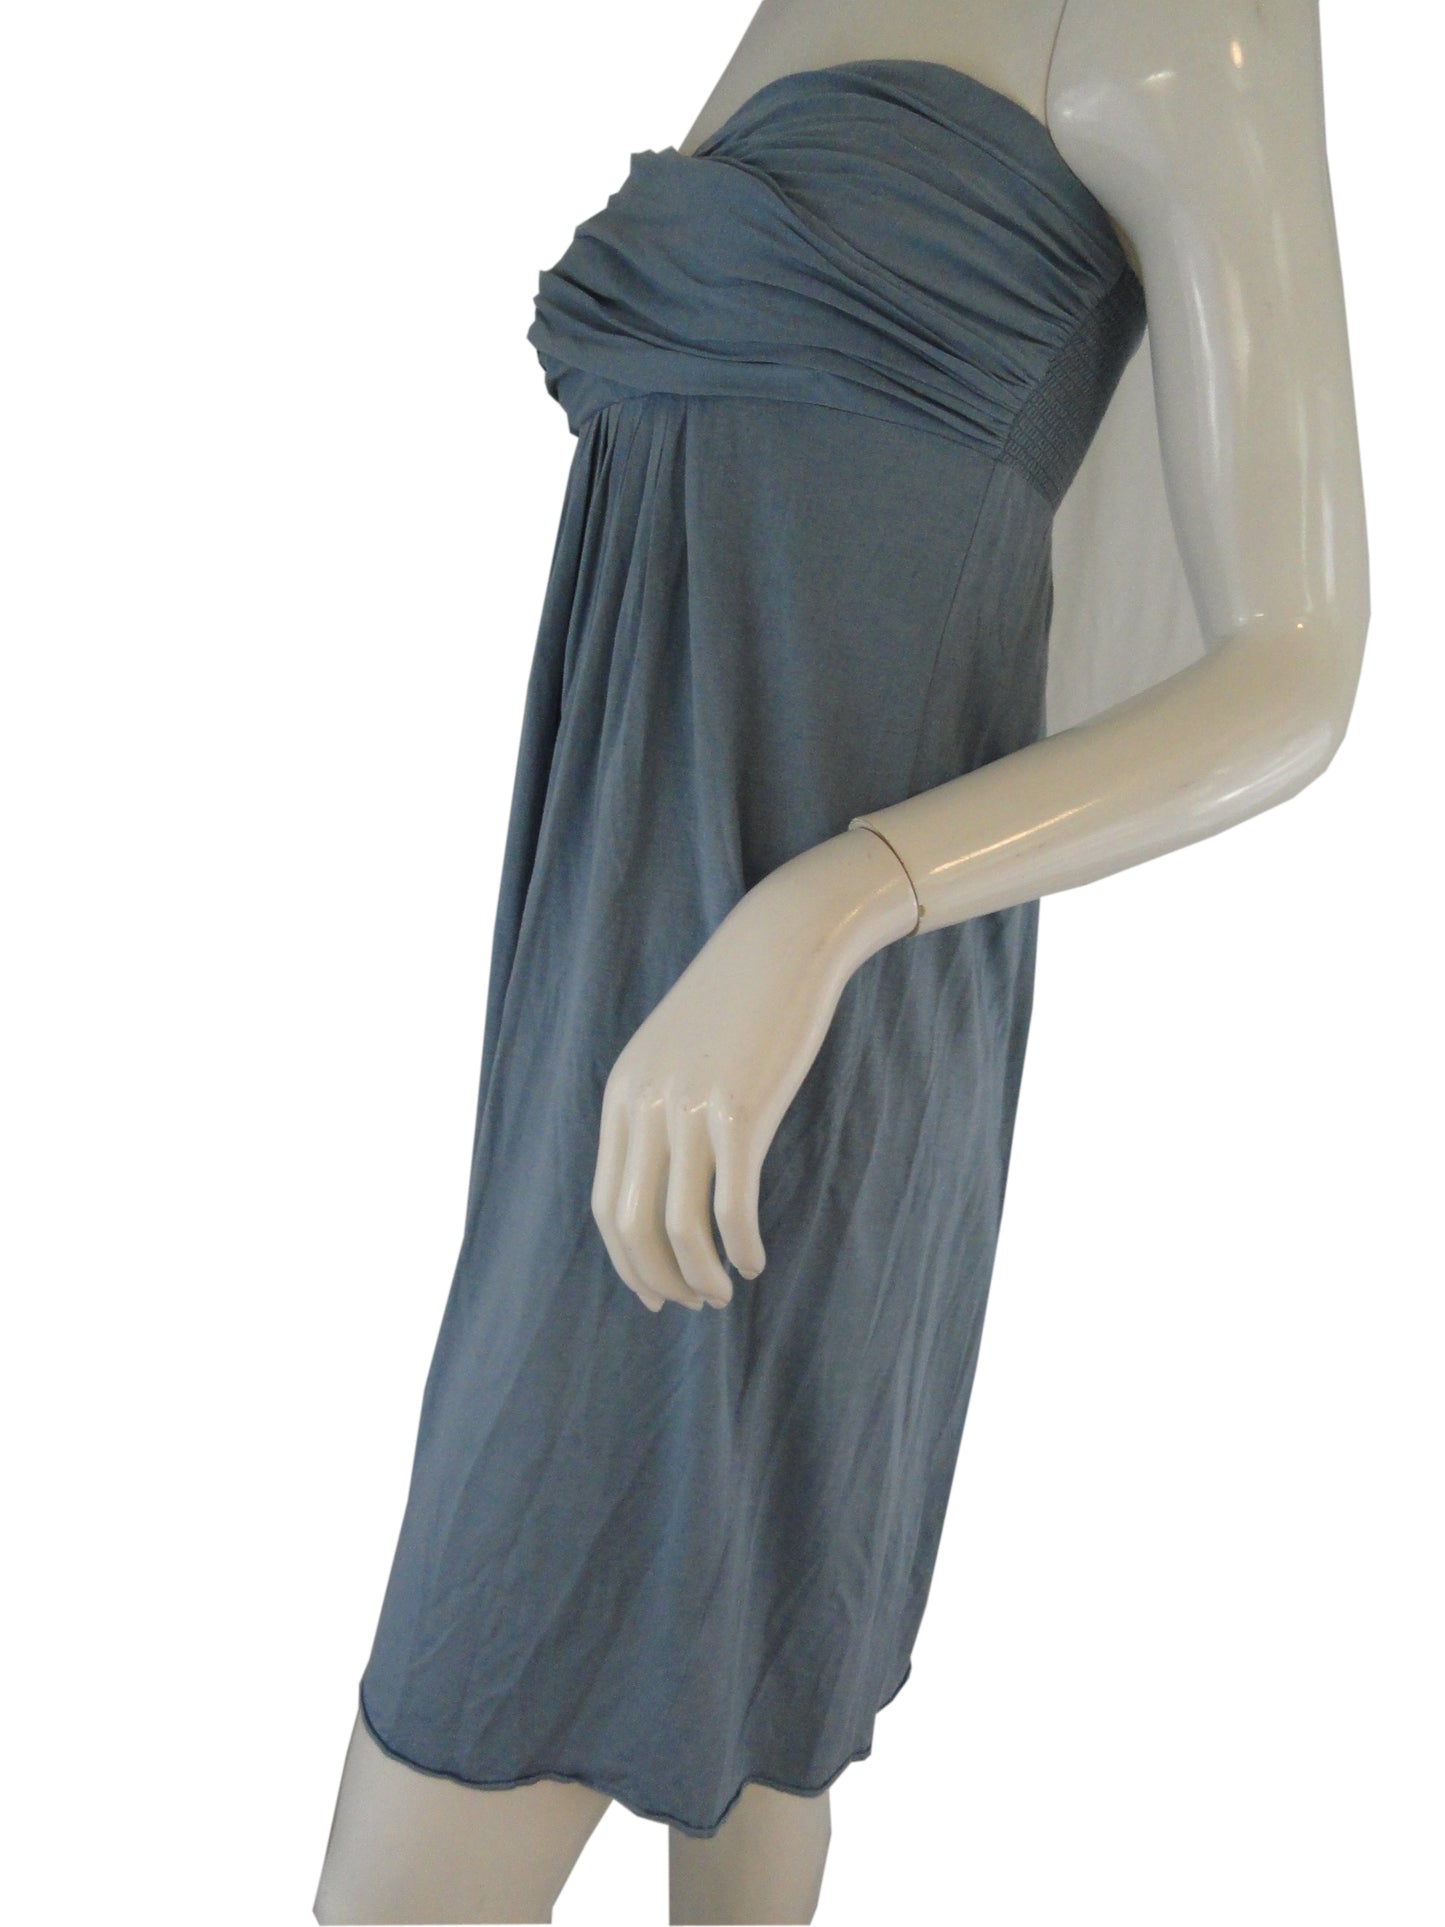 Banana Republic Dress Strapless Grey Blue Size Small SKU 001003